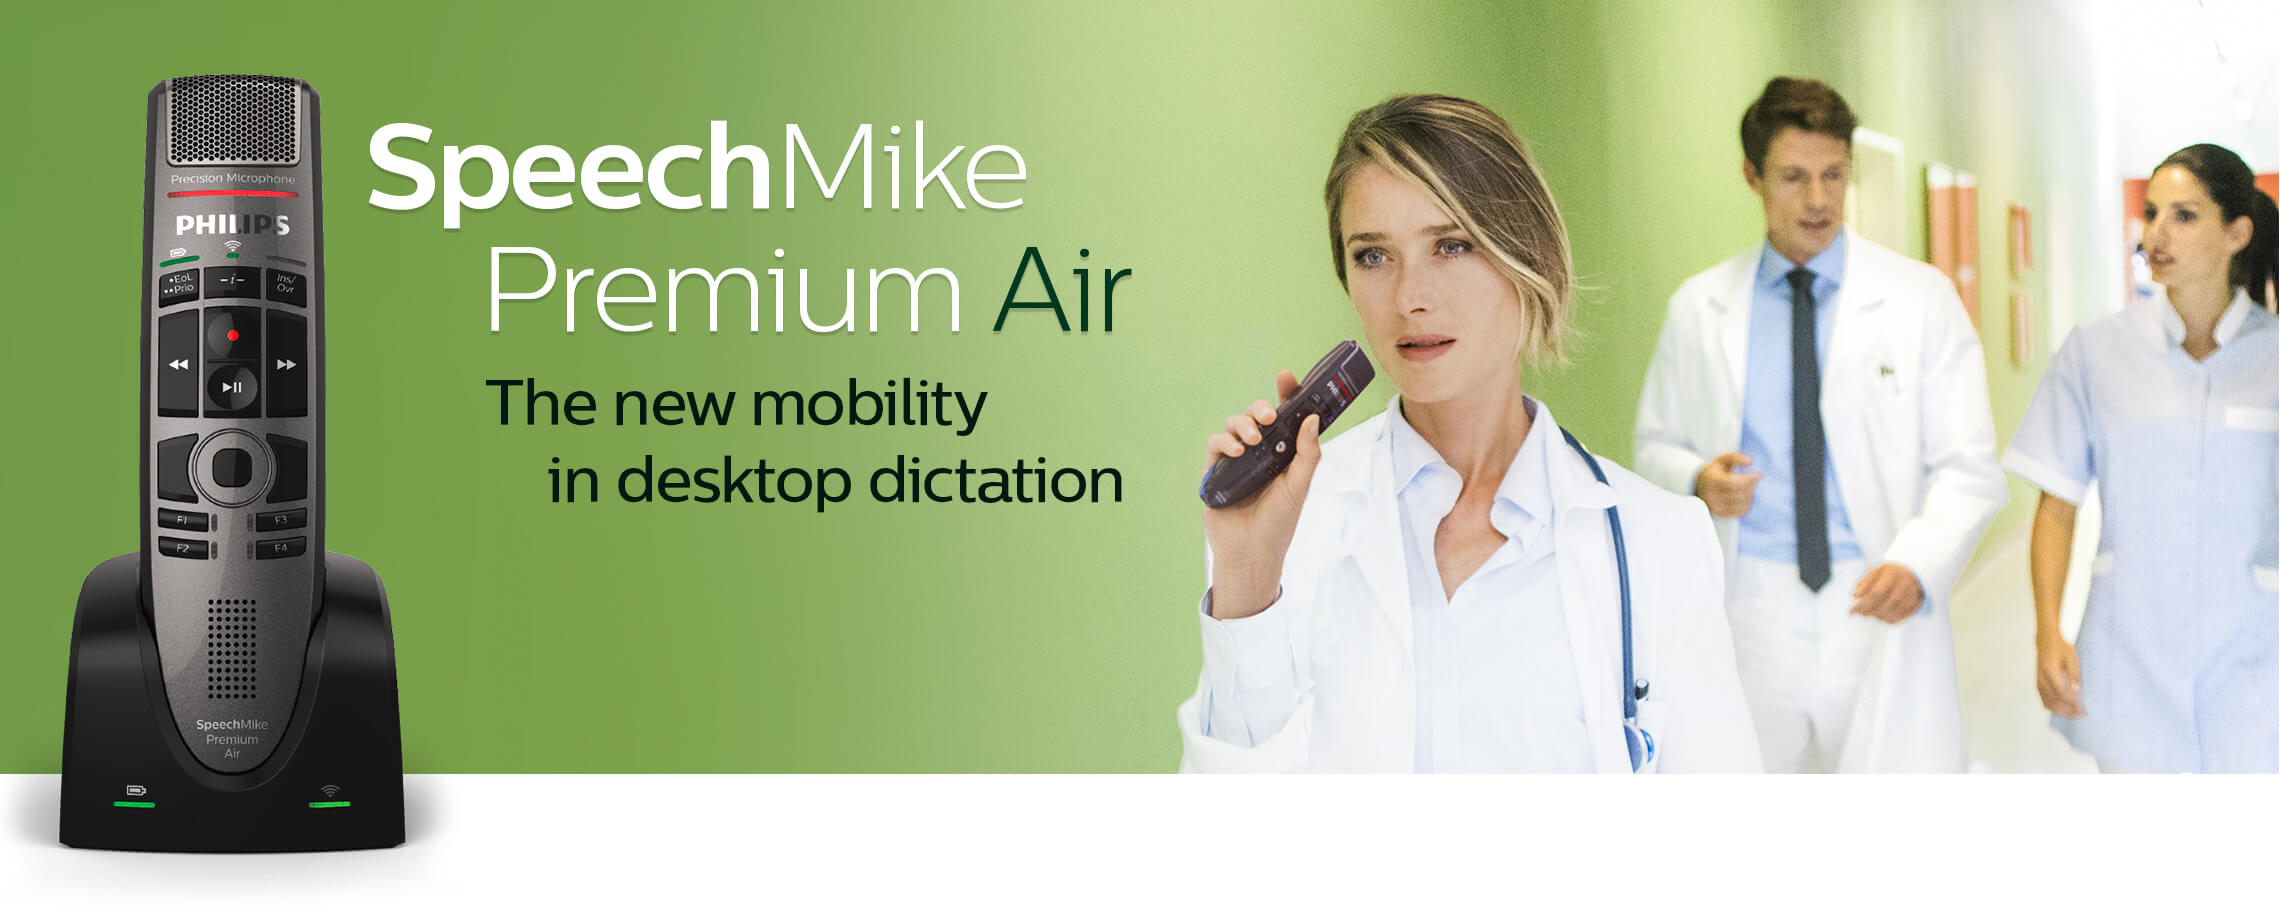 SpeechMike PremiumAir - The new mobility in desktop dictation